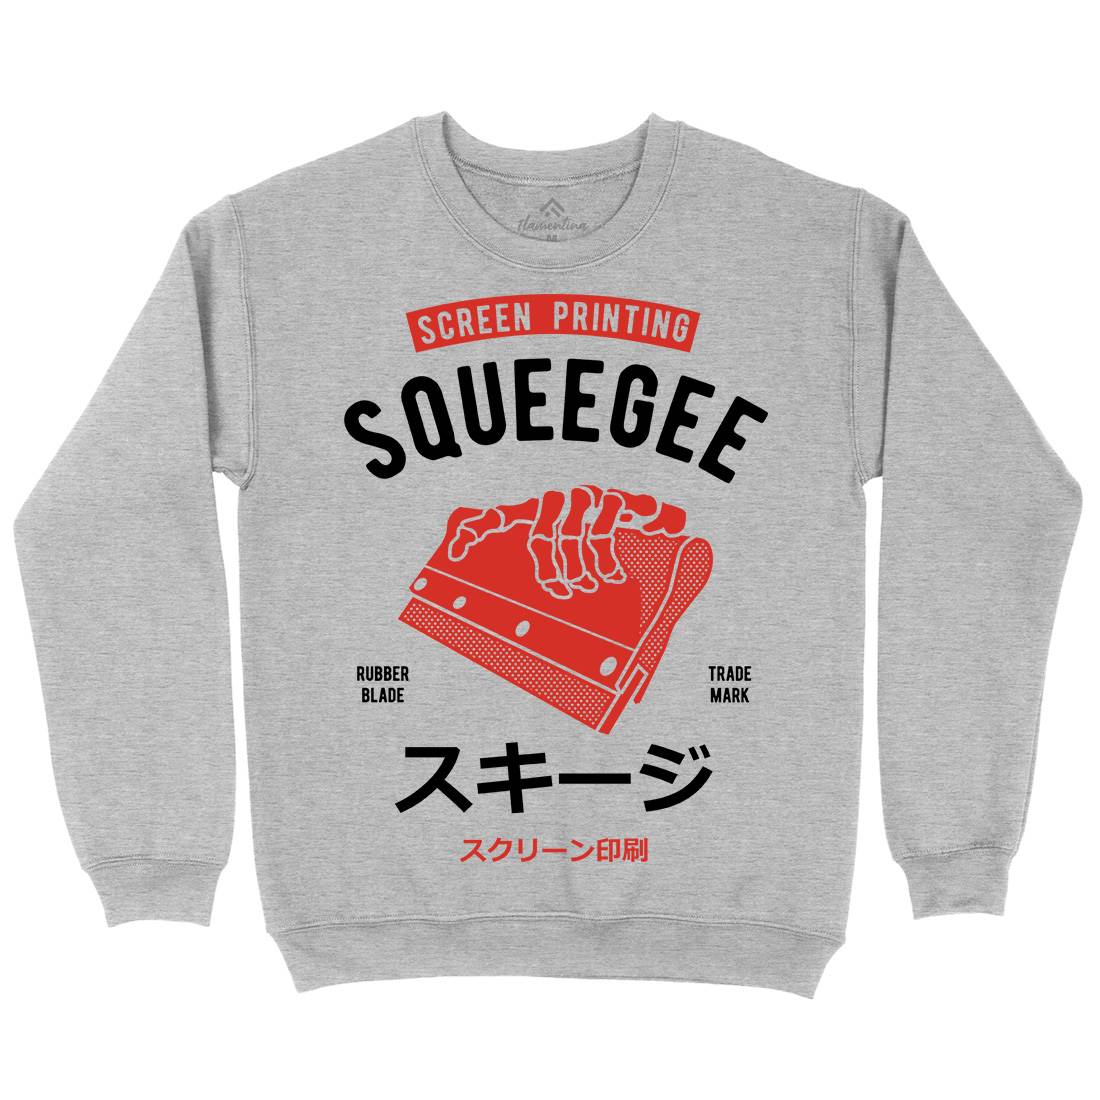 Squeegee Social Club Mens Crew Neck Sweatshirt Work A282